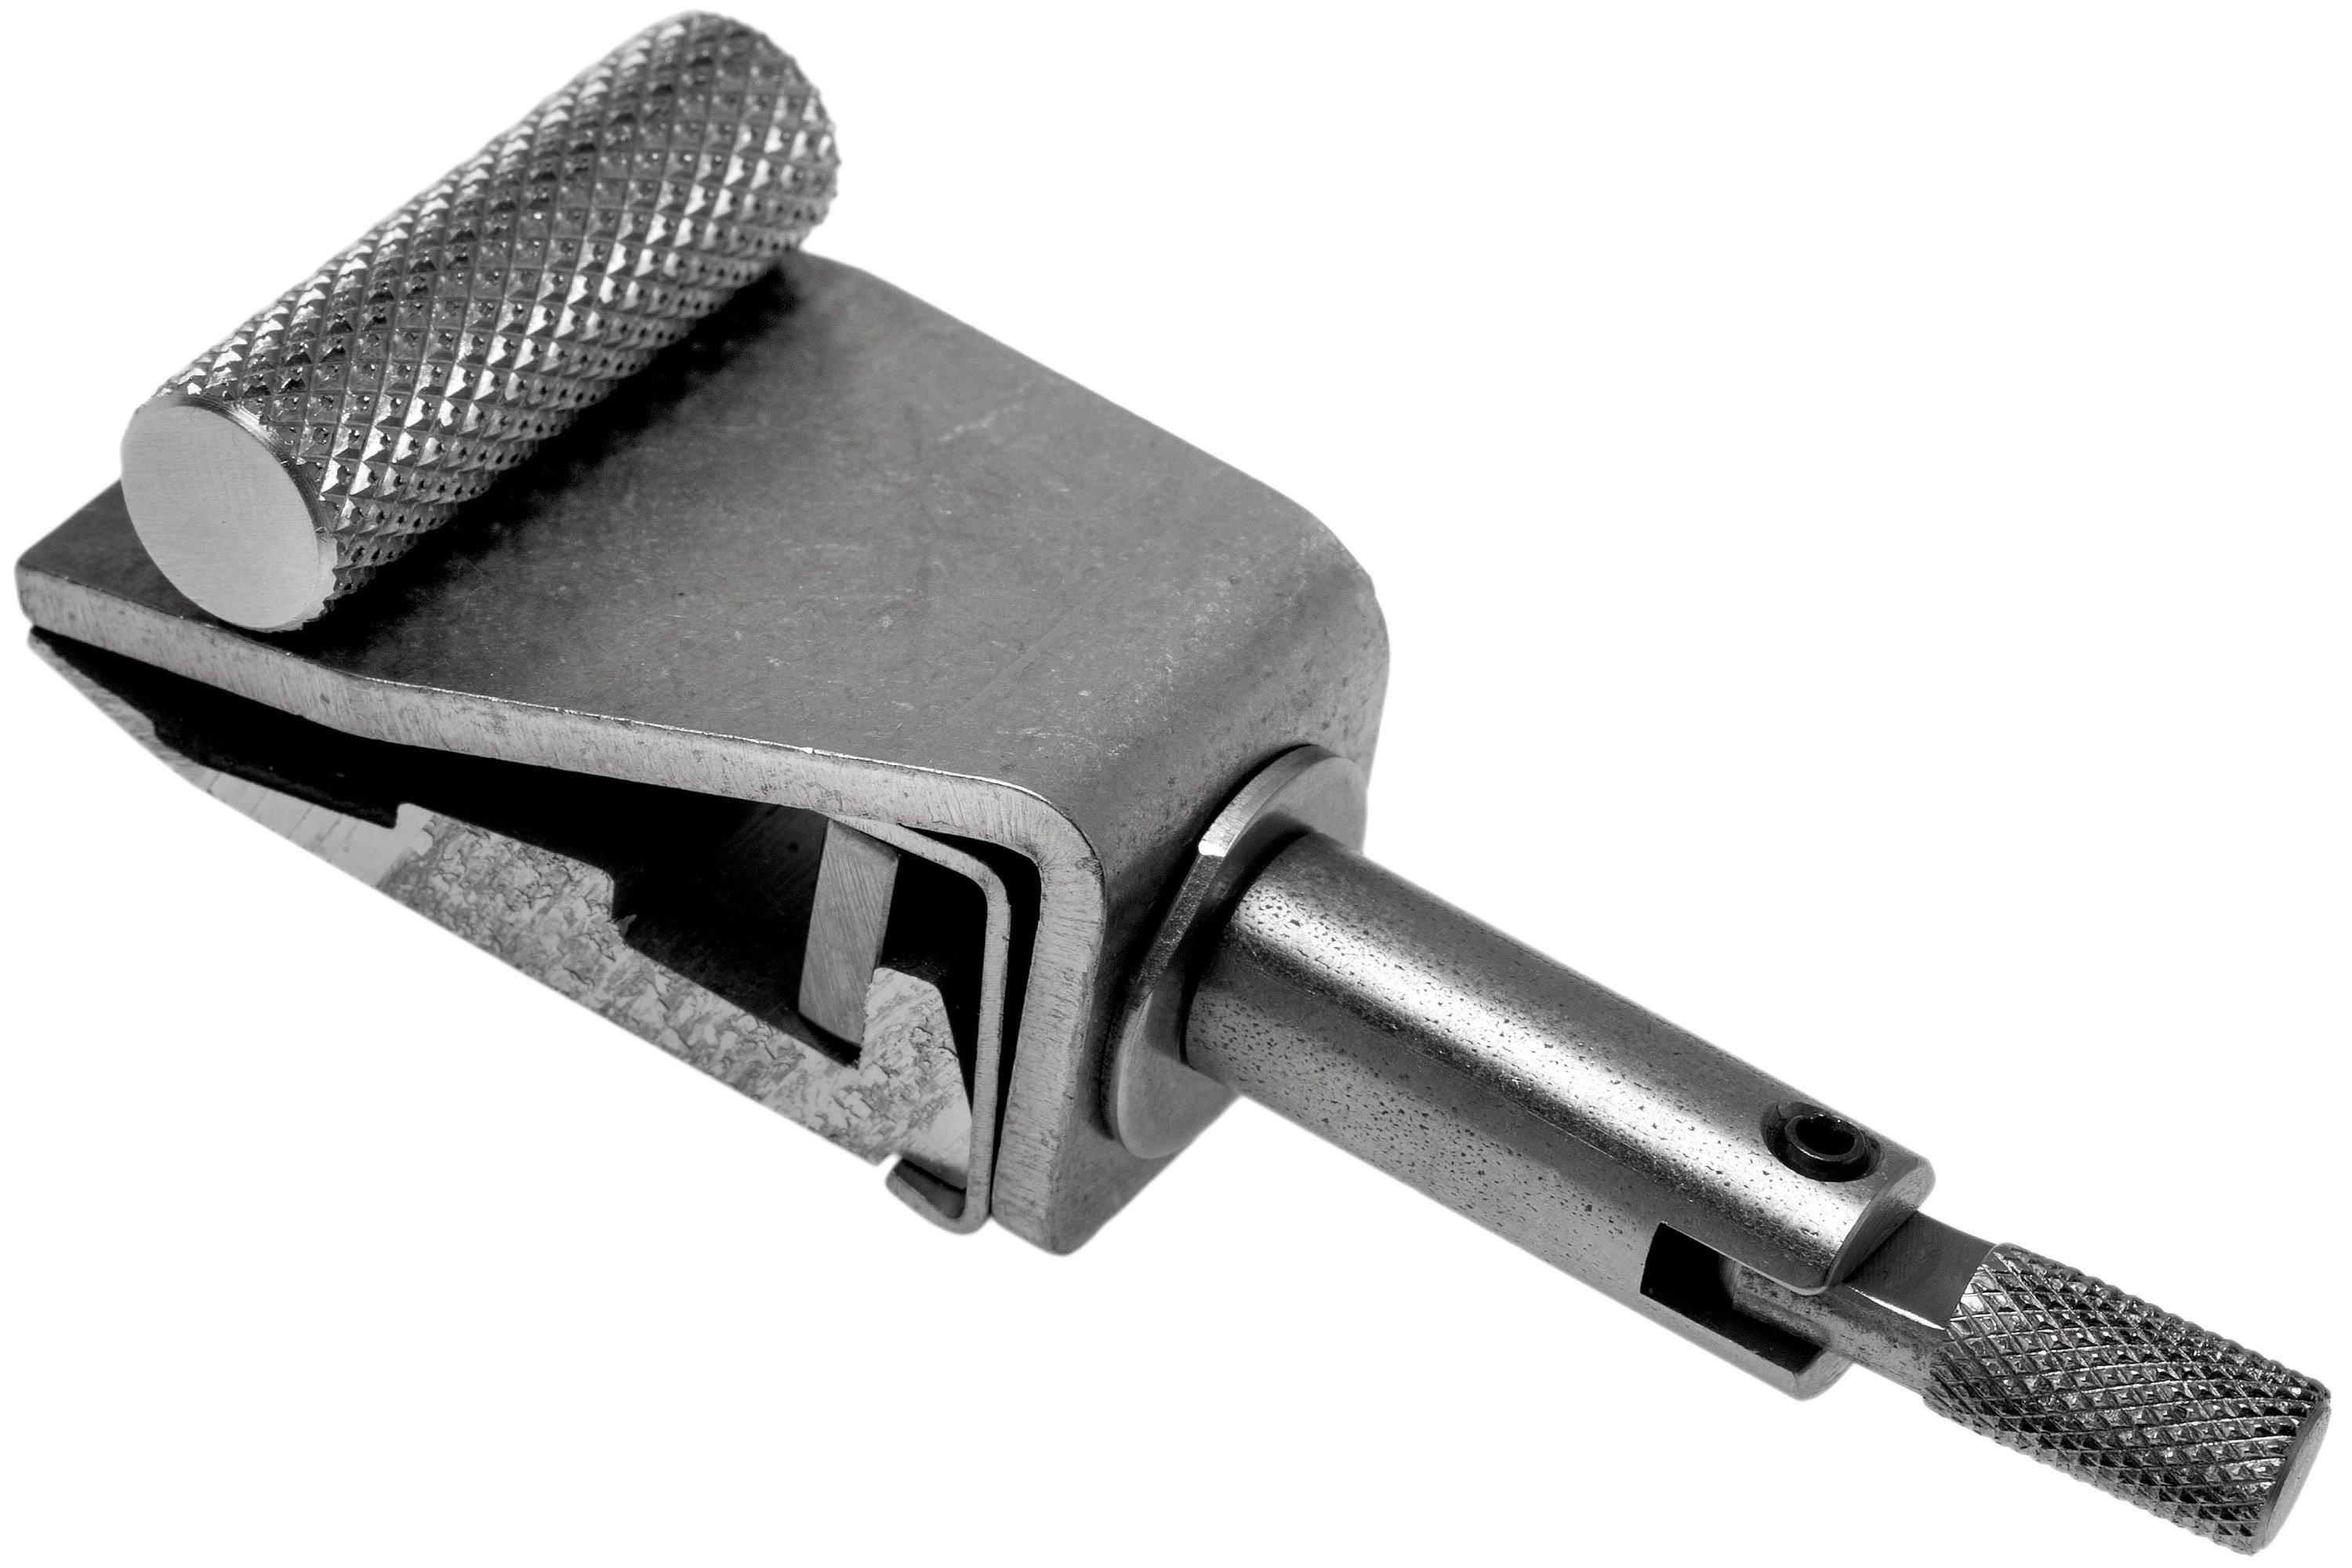 KME attachment to sharpen scissors, SCR-Sharpener